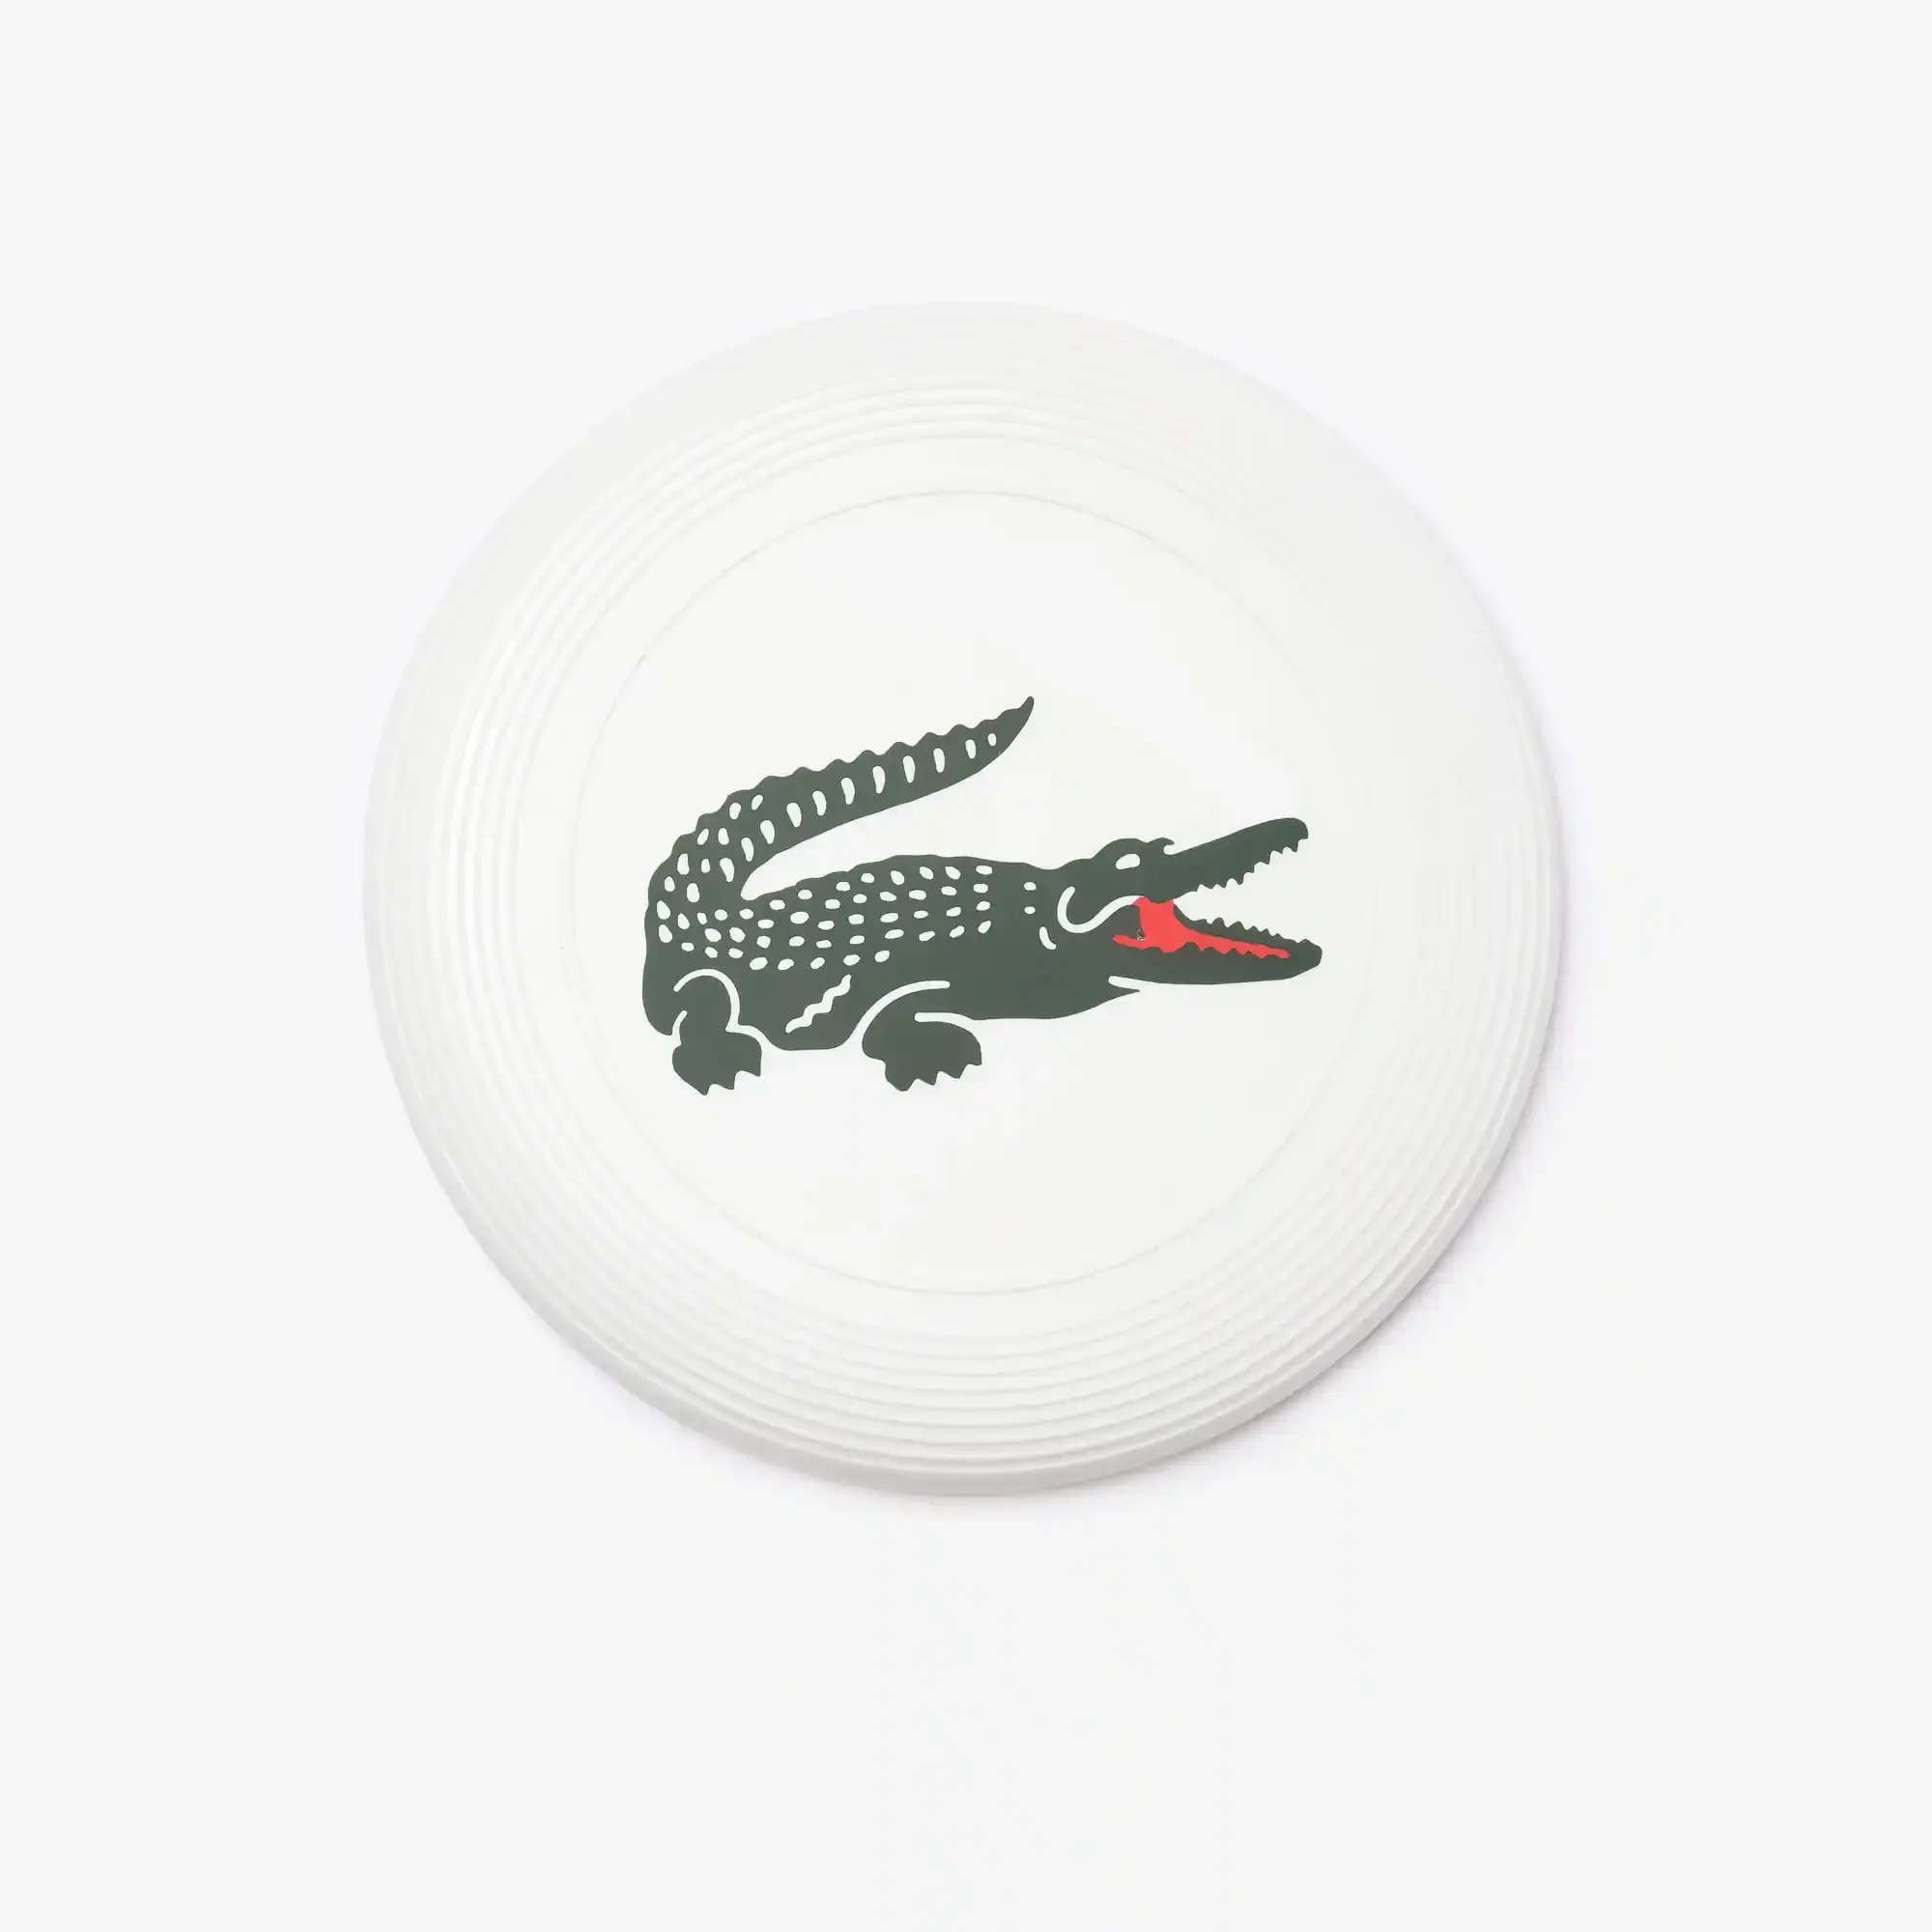 Lacoste Frisbee crocodile print. 1